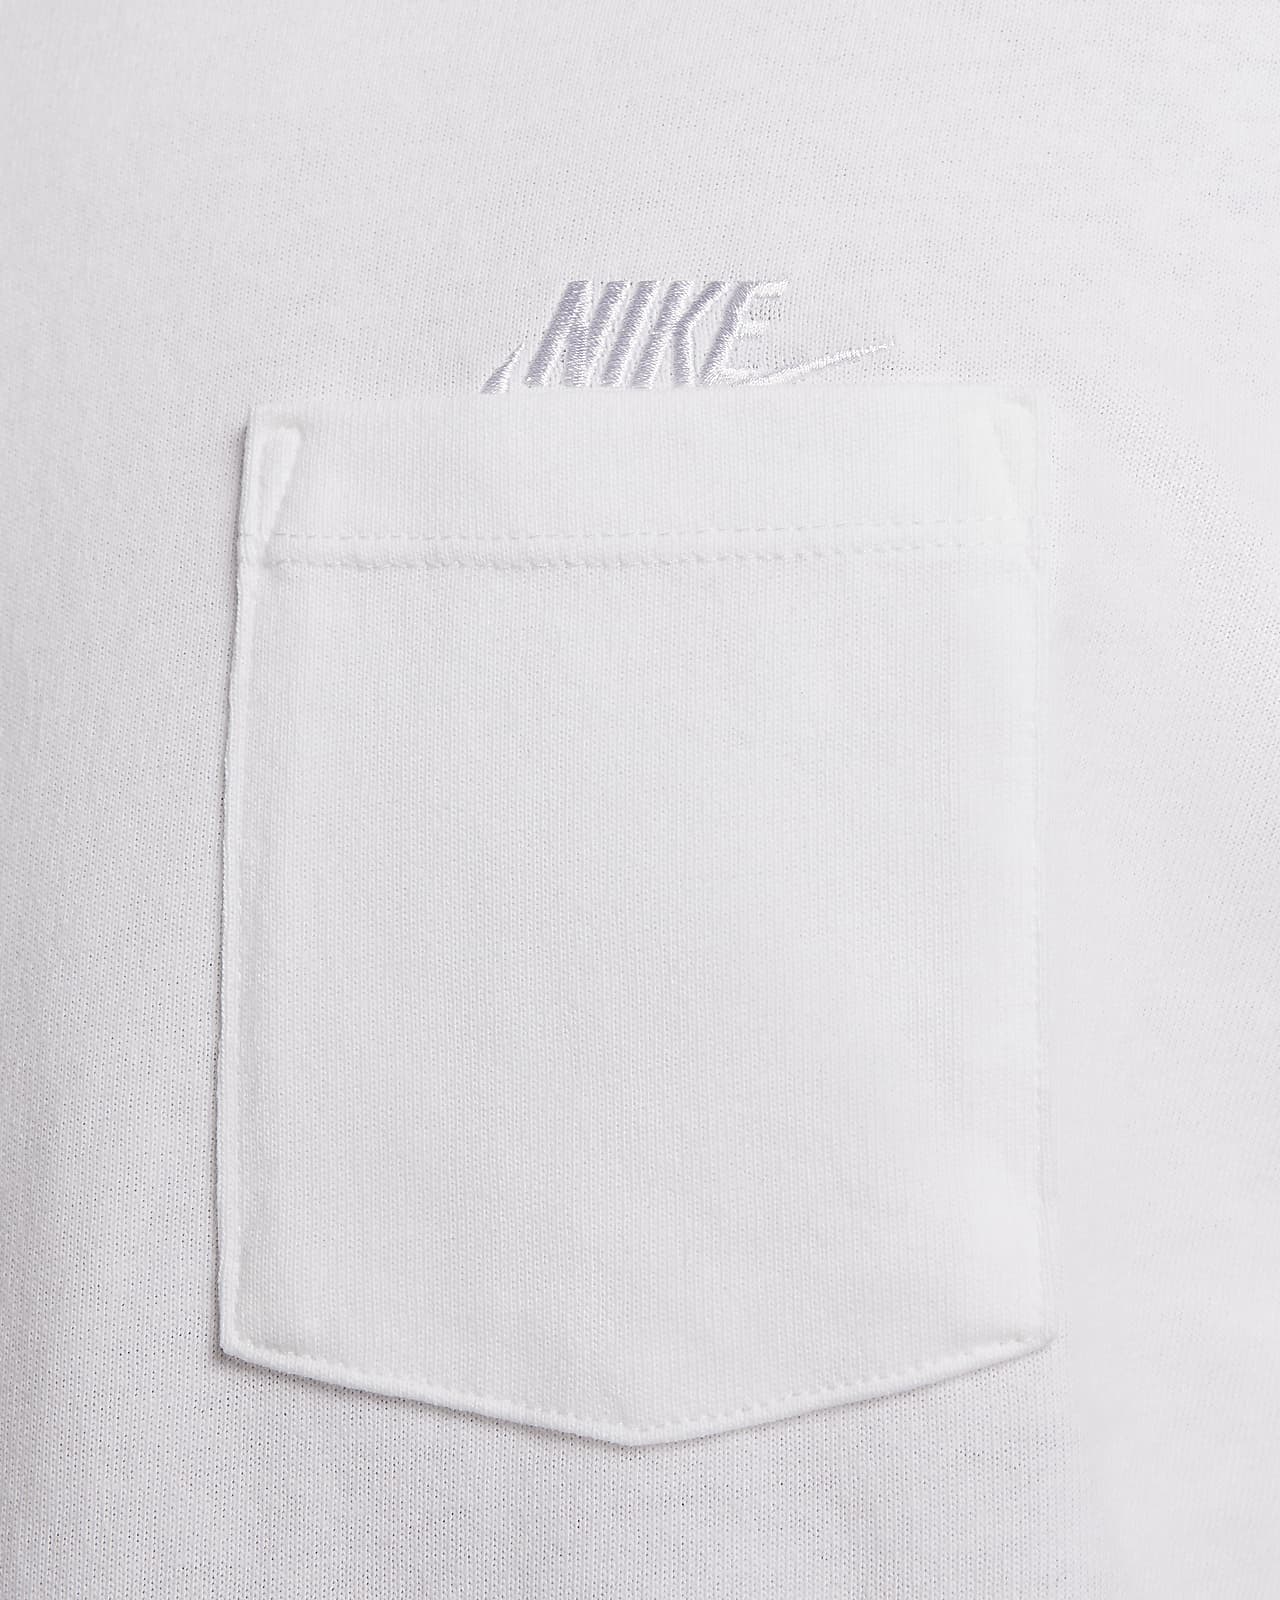 Nike Sportswear Premium Men\'s T-Shirt. Pocket Essentials